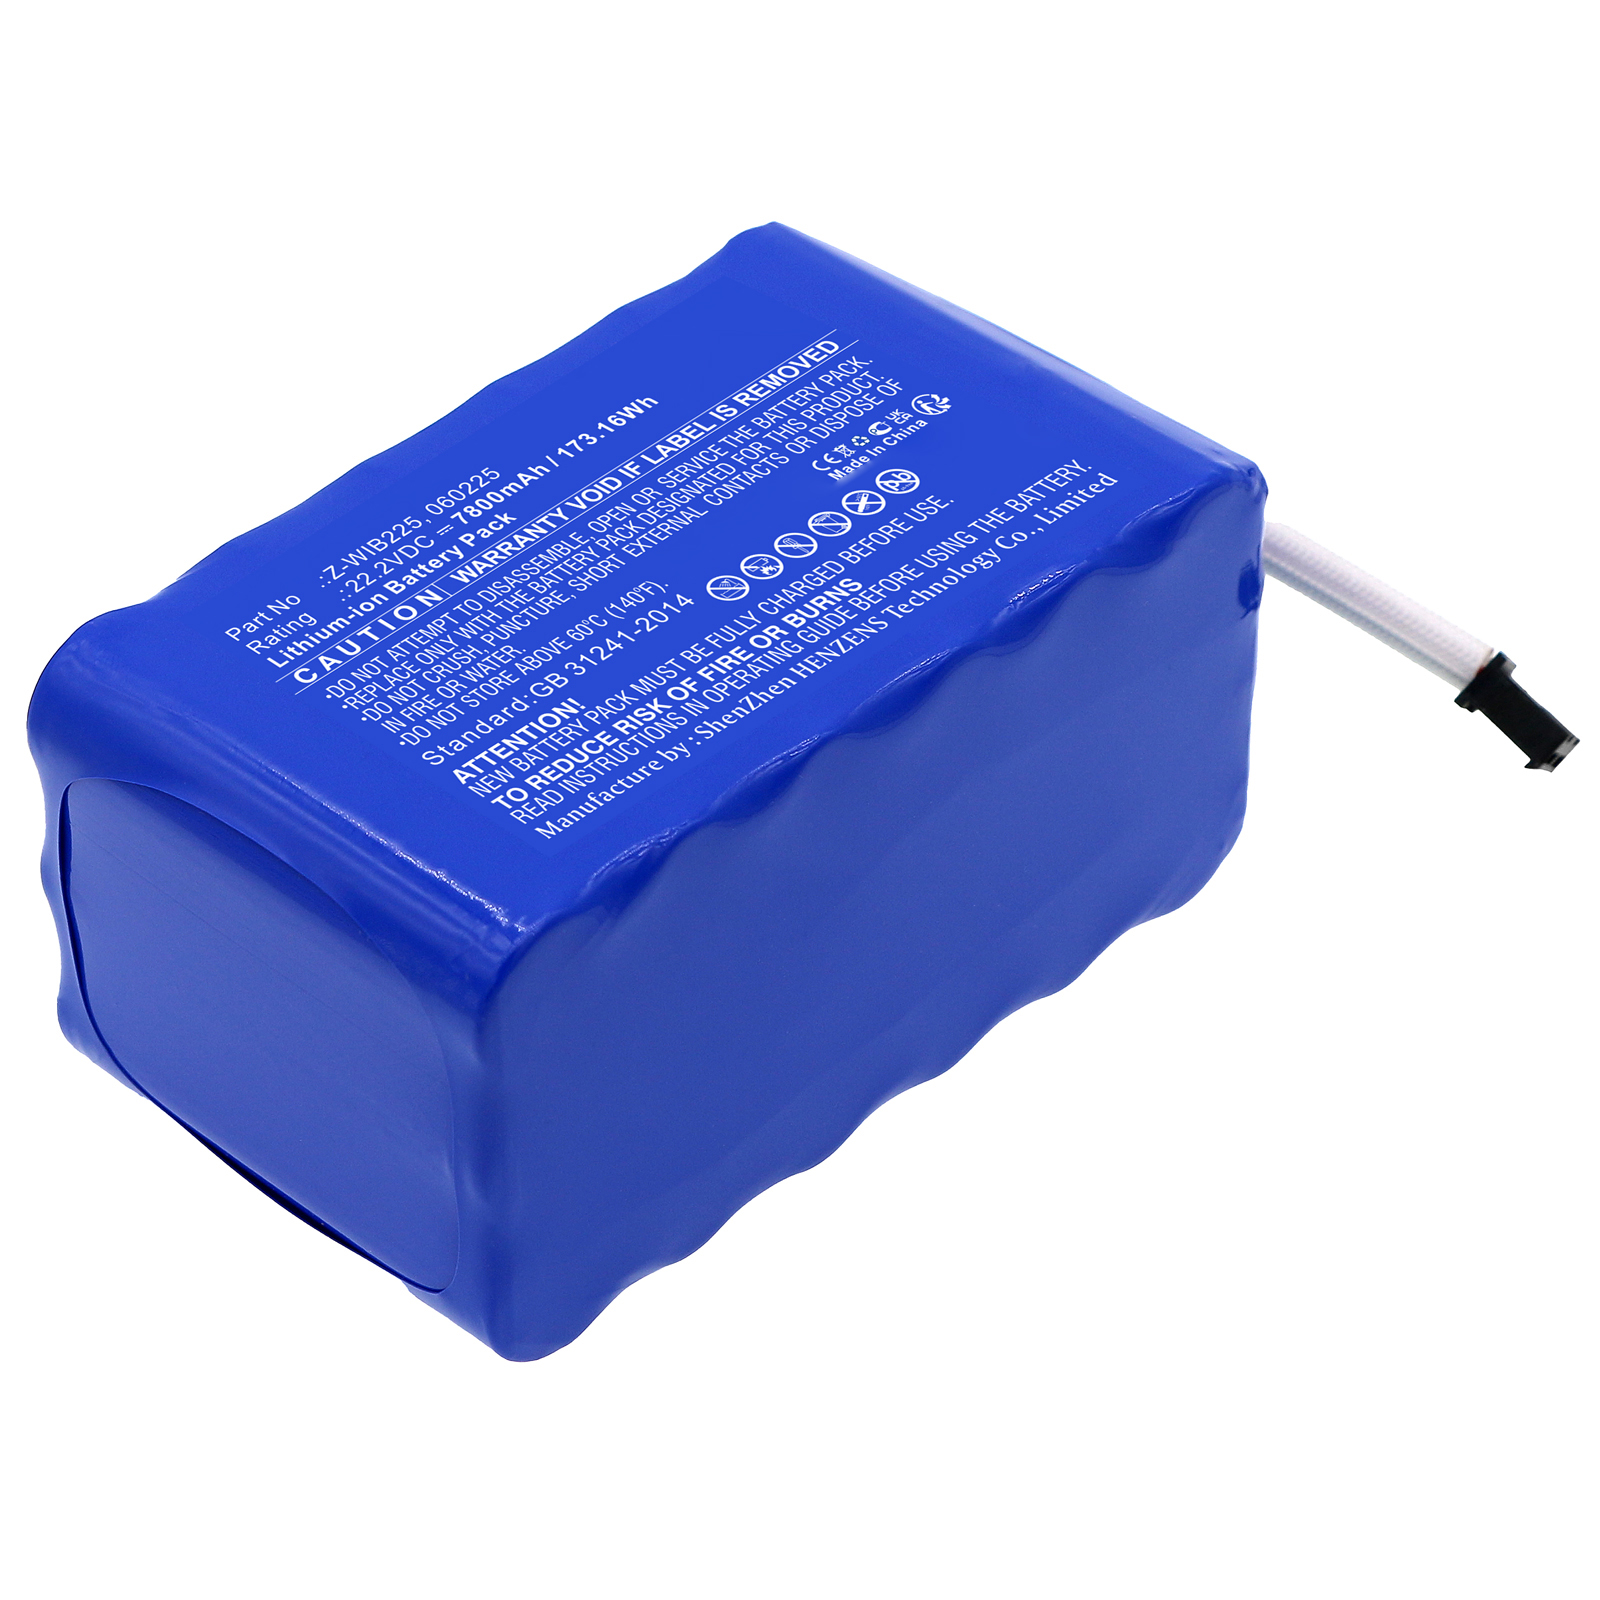 Synergy Digital Lighting & Studio Battery, Compatible with American DJ Z-WIB225 Lighting & Studio Battery (Li-ion, 22.2V, 7800mAh)